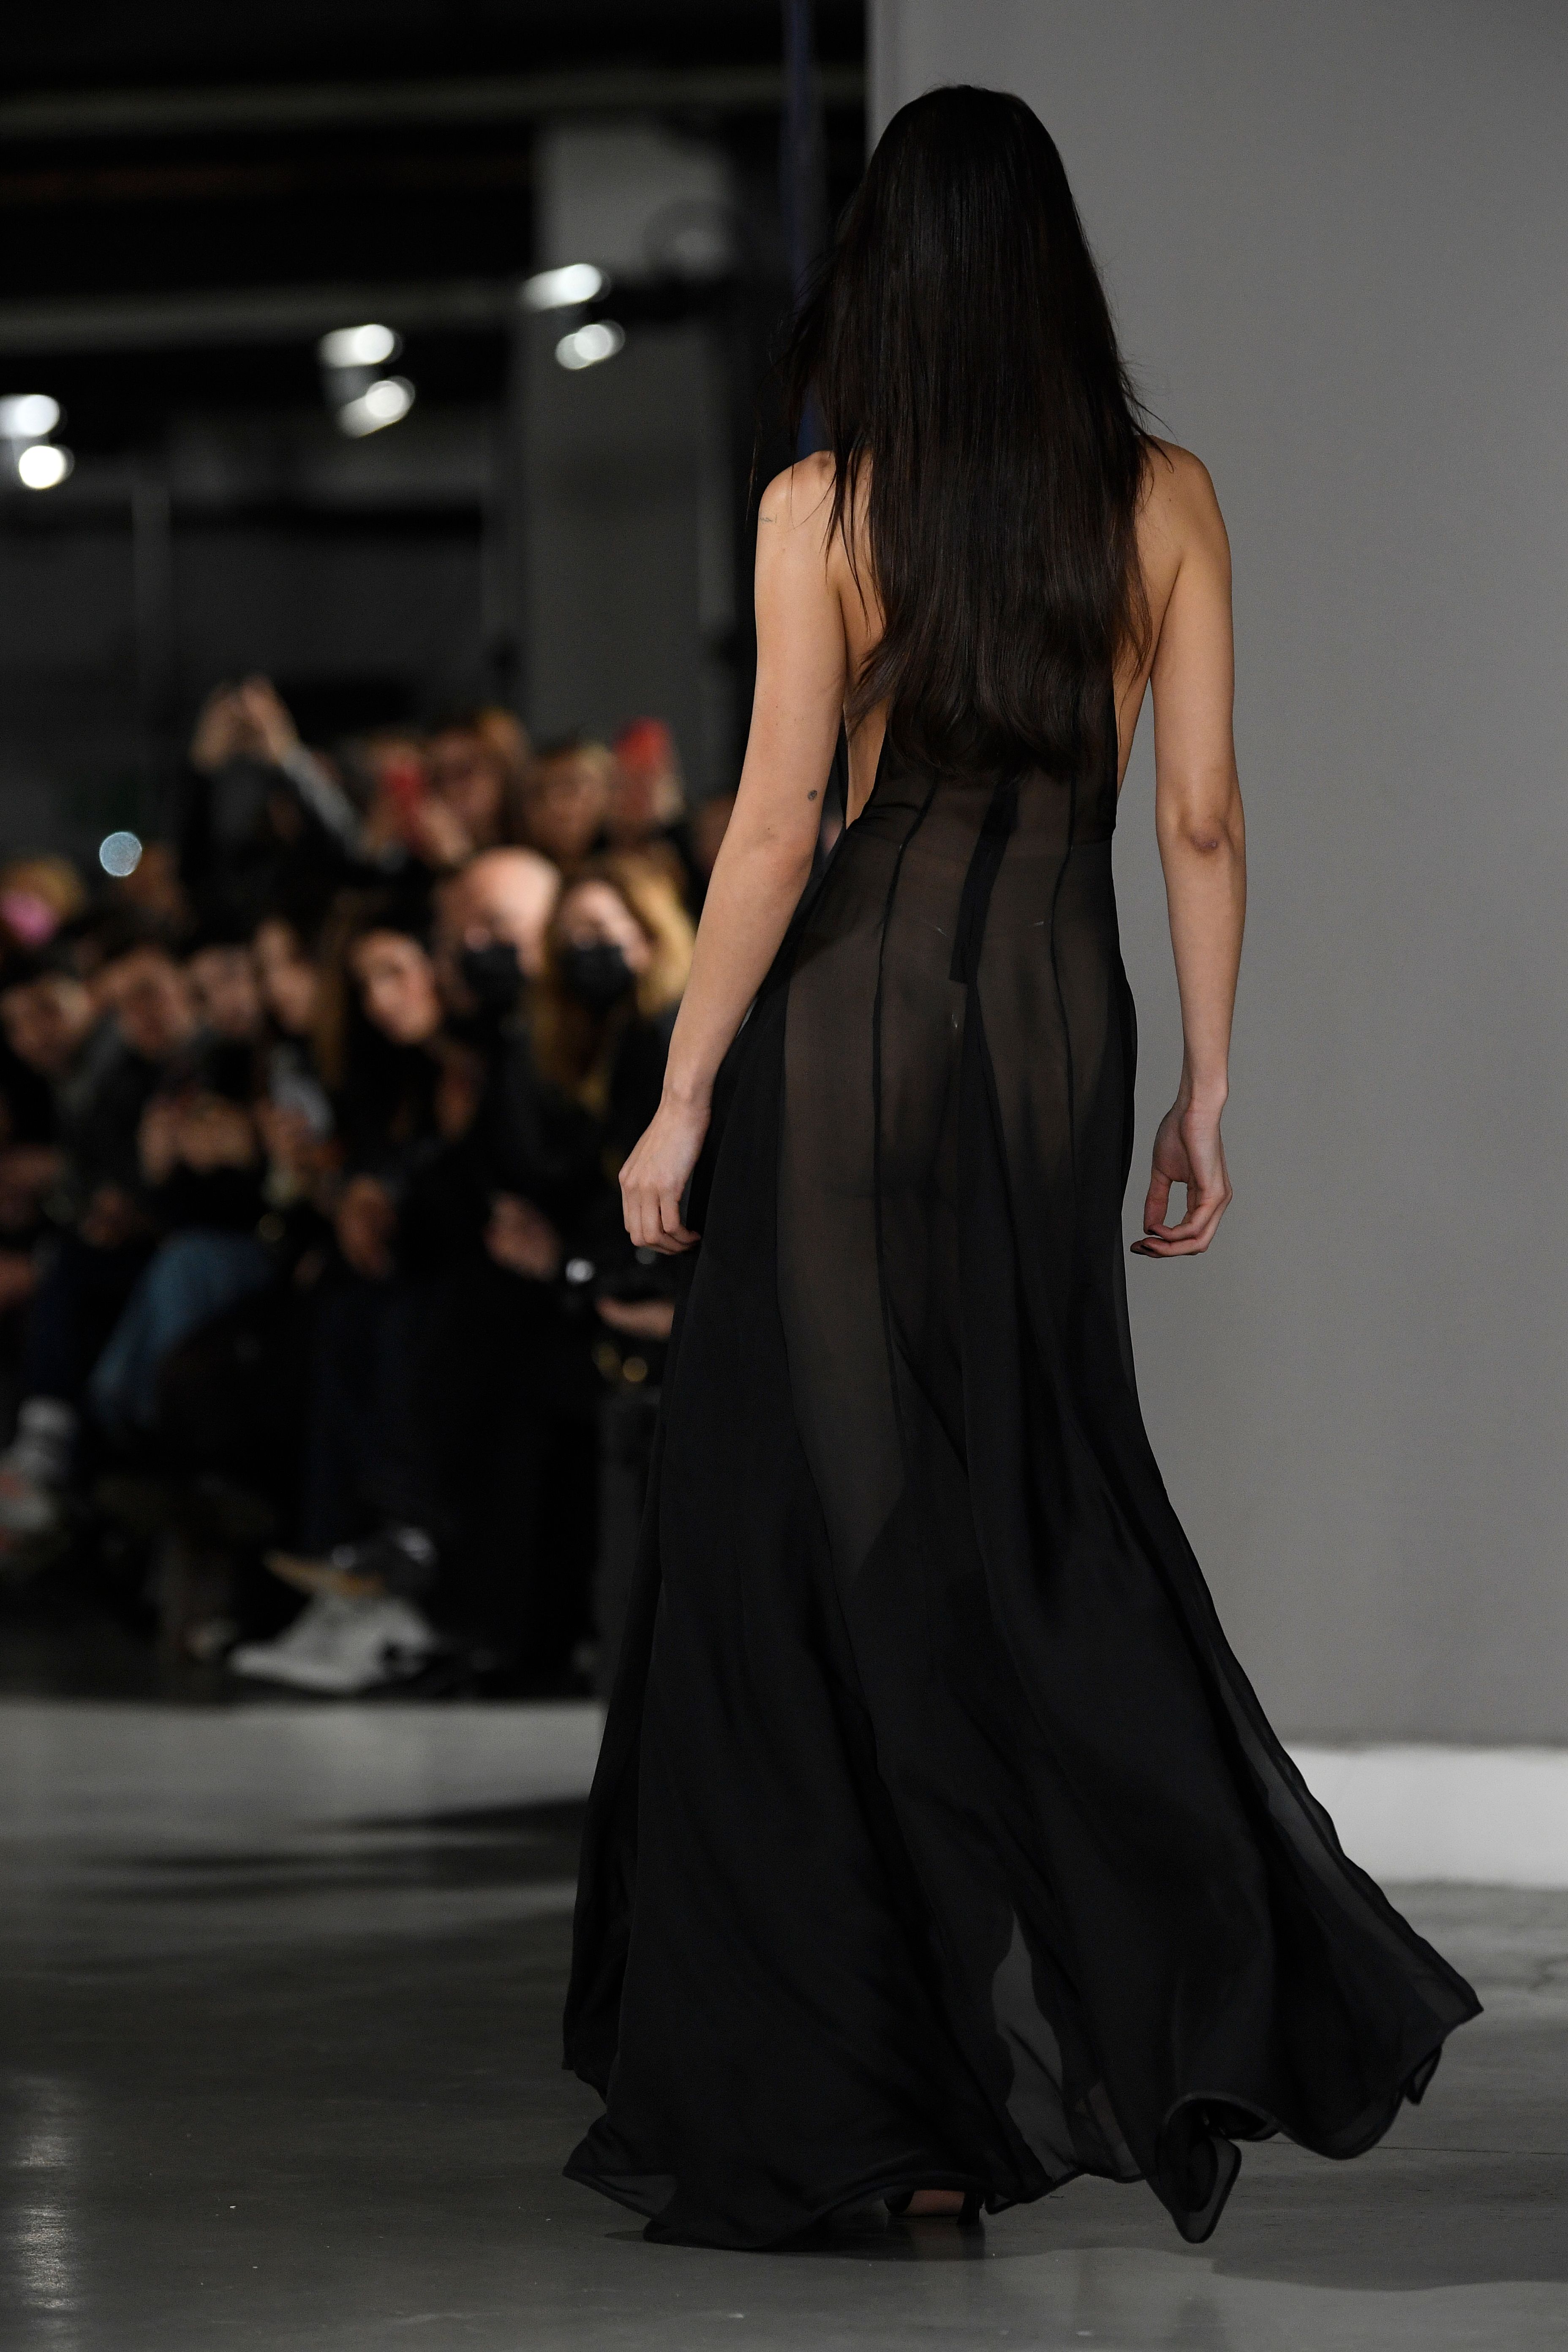 Bella Hadid Bares All in See-Through Dresses at Paris Fashion Week